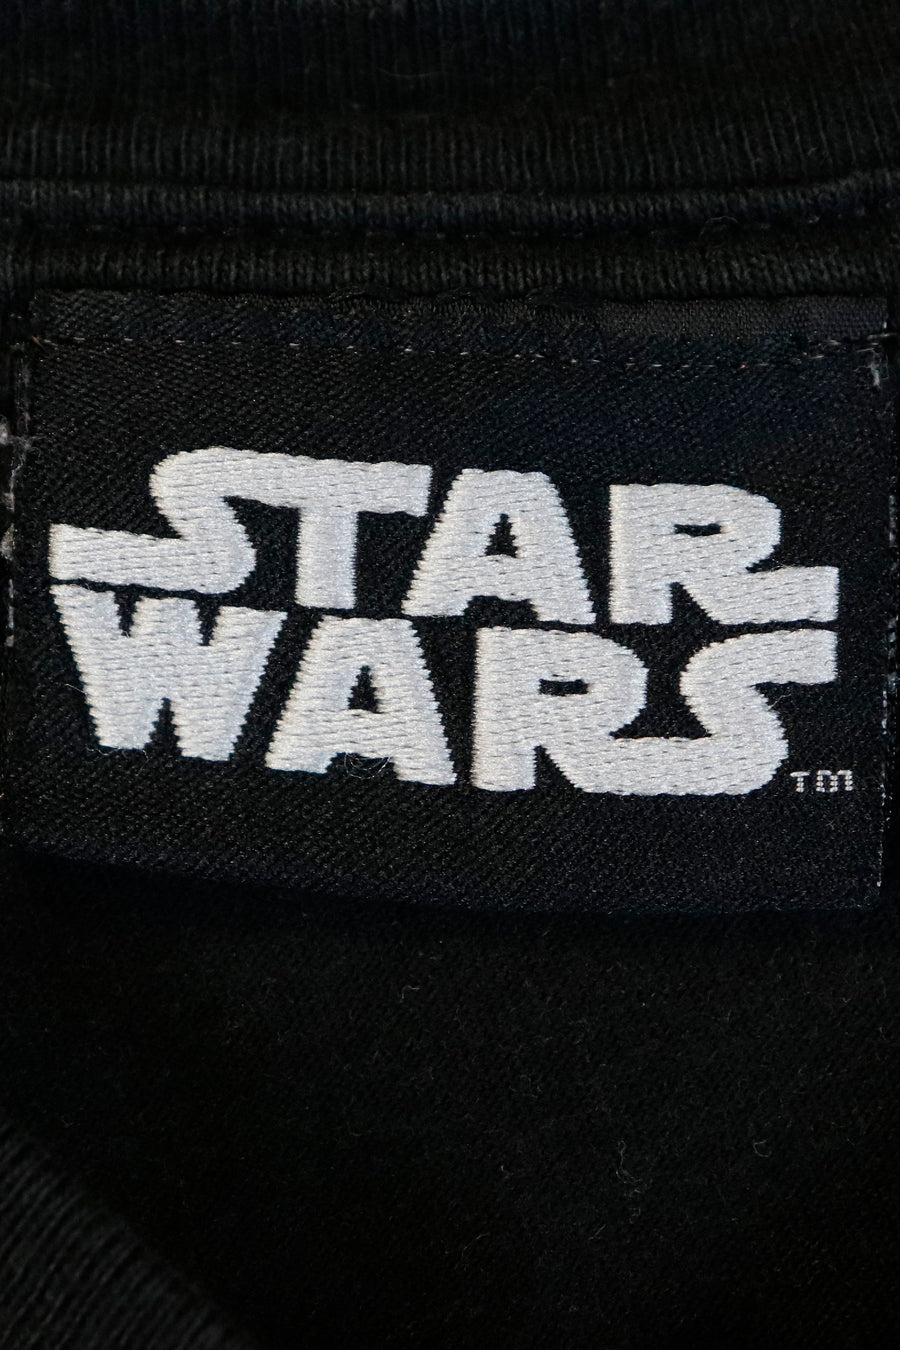 Vintage Star Wars Episod IV A New Hope T Shirt